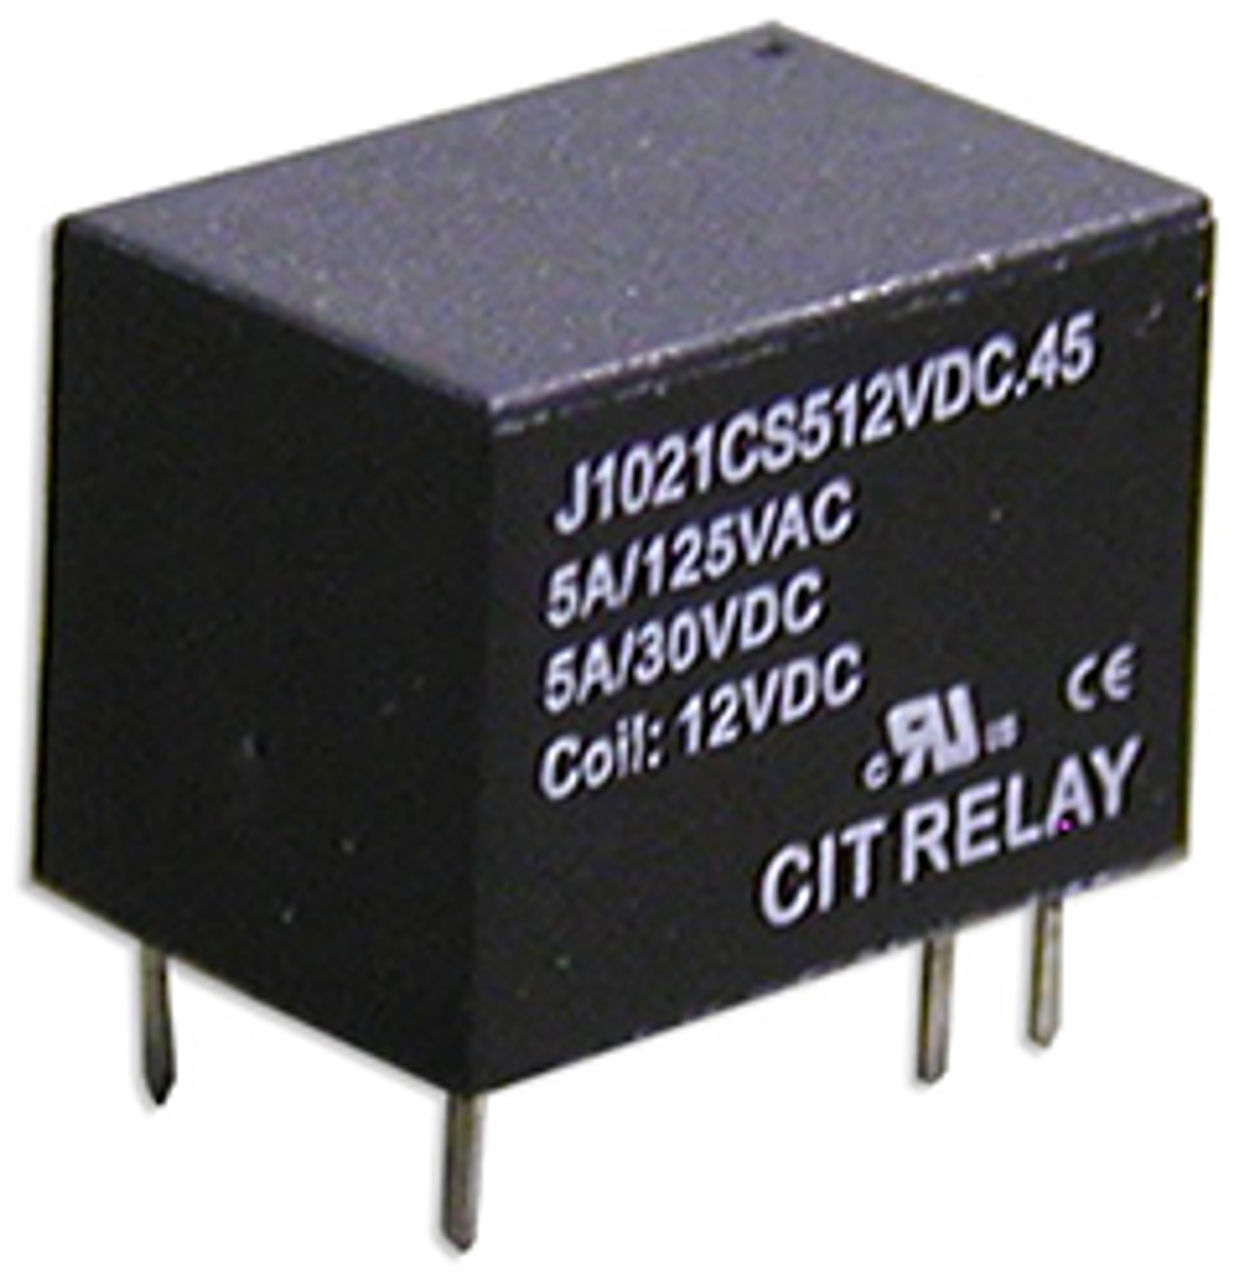 CIT Relay and Switch J1021CS53VDC.45 Power Relays